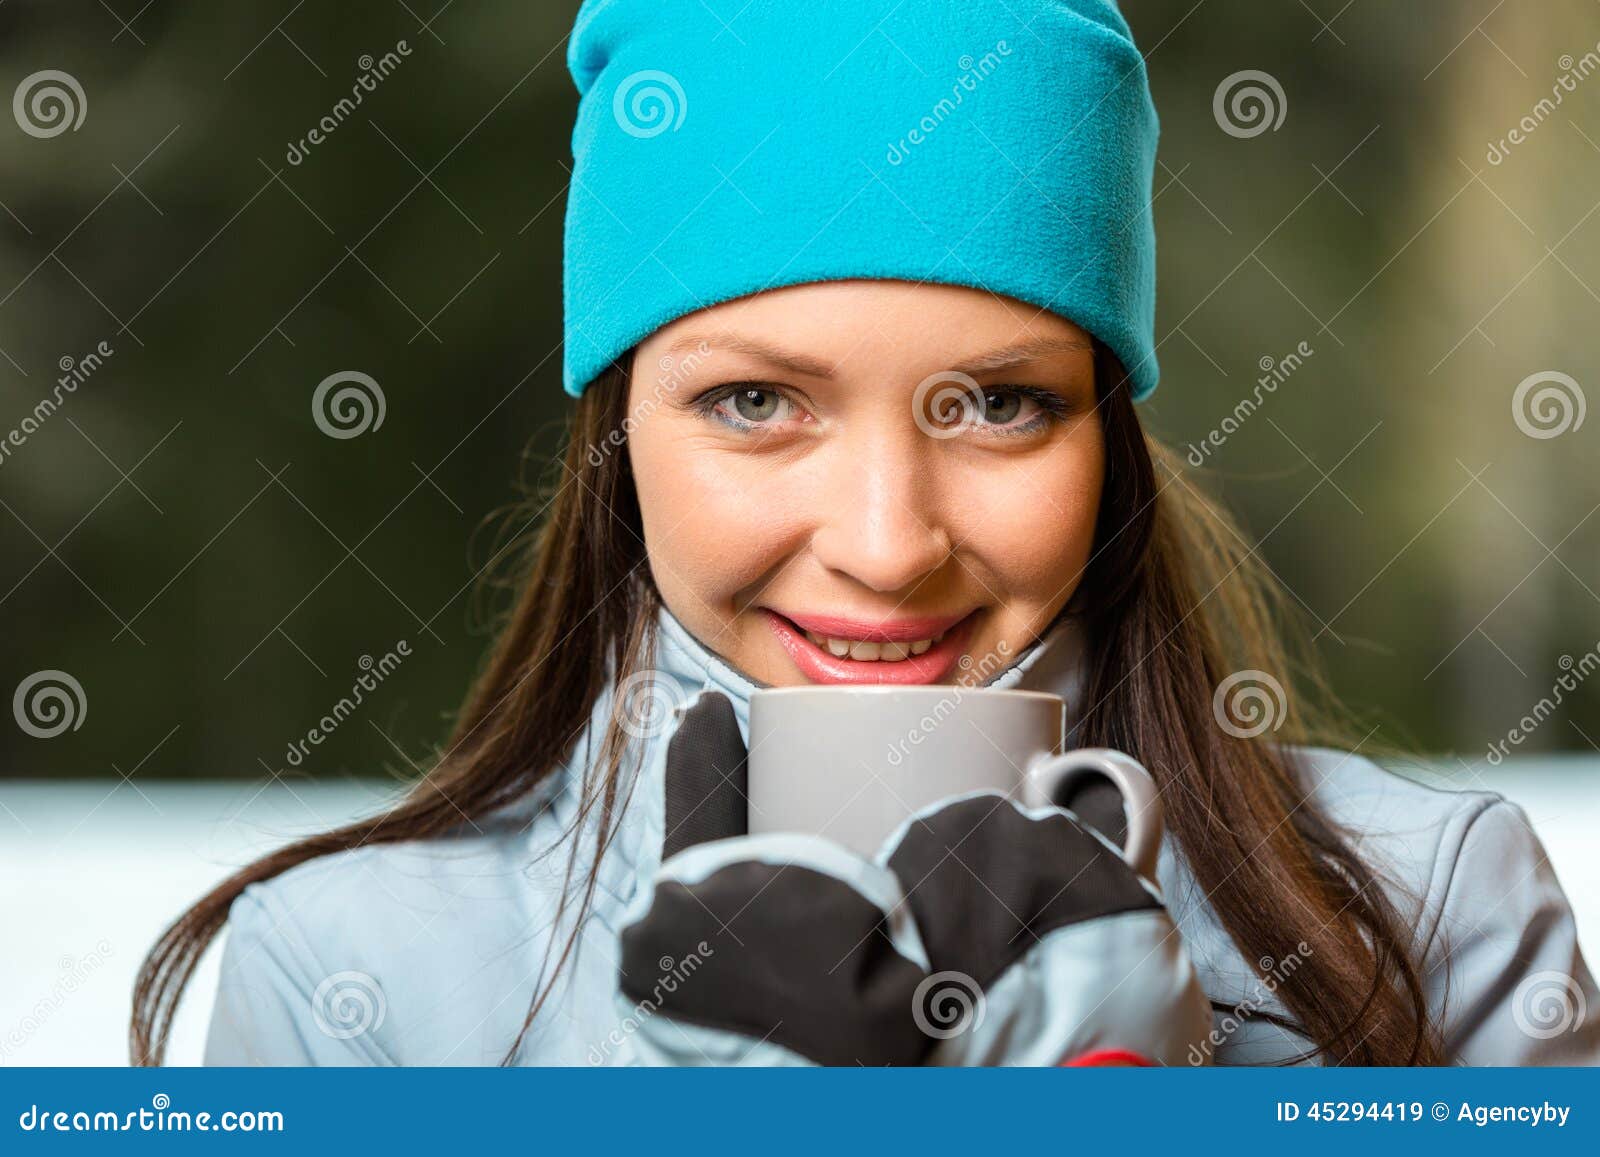 Portrait of Female Drinking Hot Tea Stock Image - Image of female ...